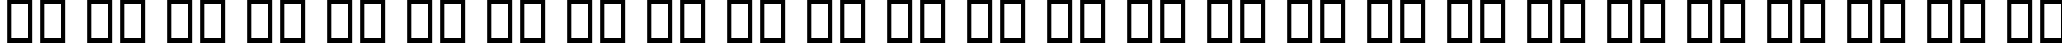 Пример написания английского алфавита шрифтом B Baran Italic